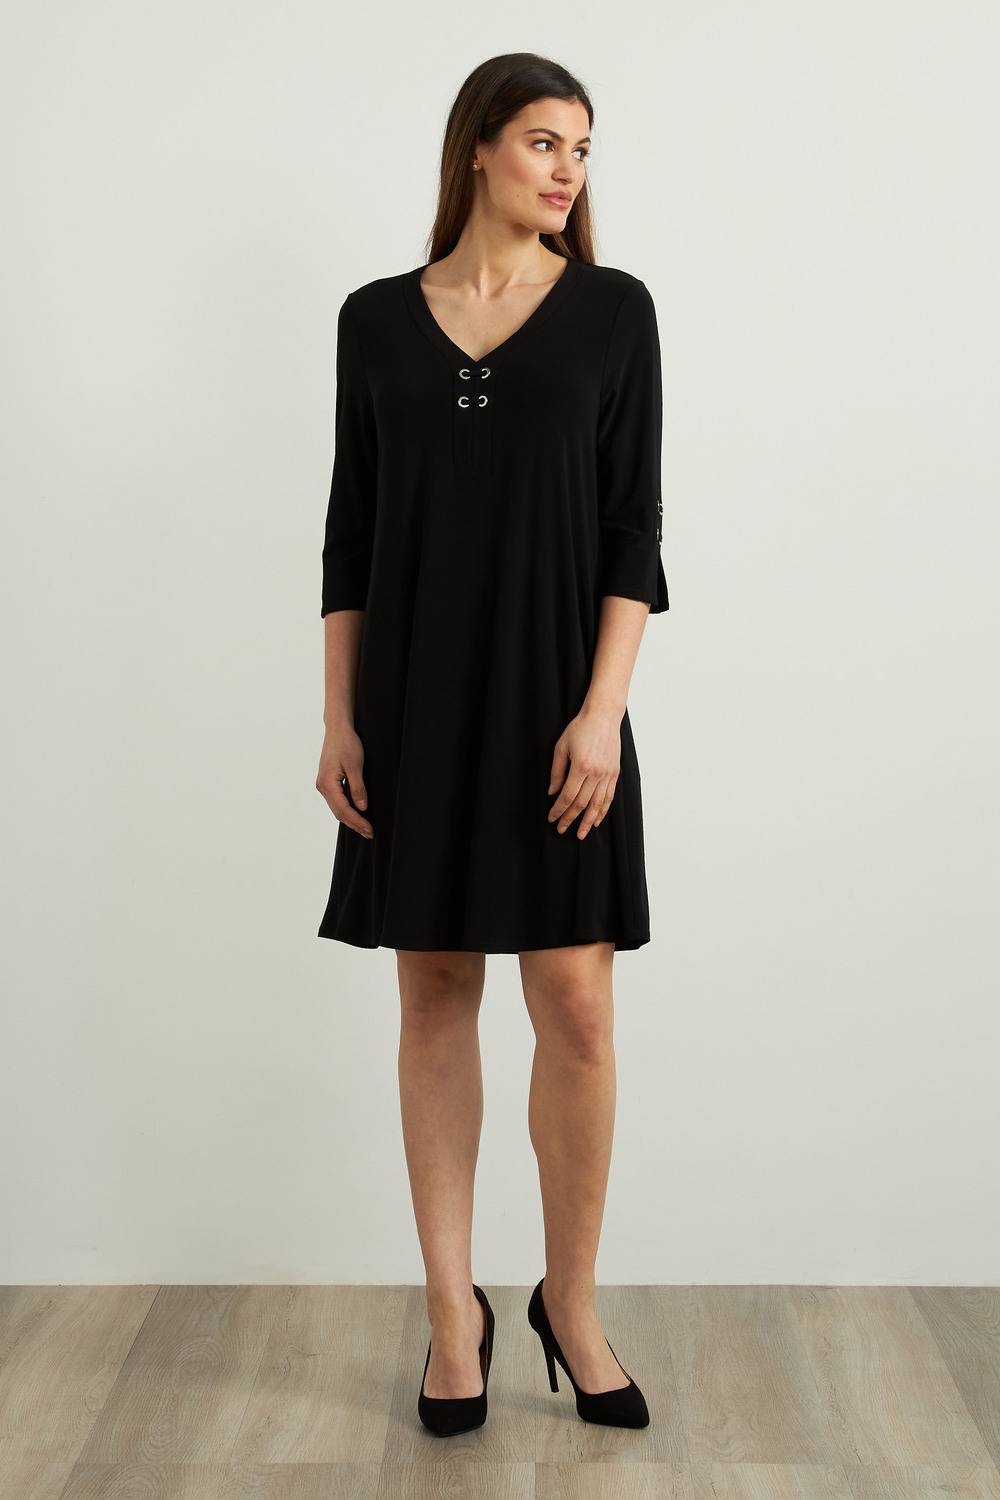 Joseph Ribkoff Fit & Flare Dress Style 213361. Black